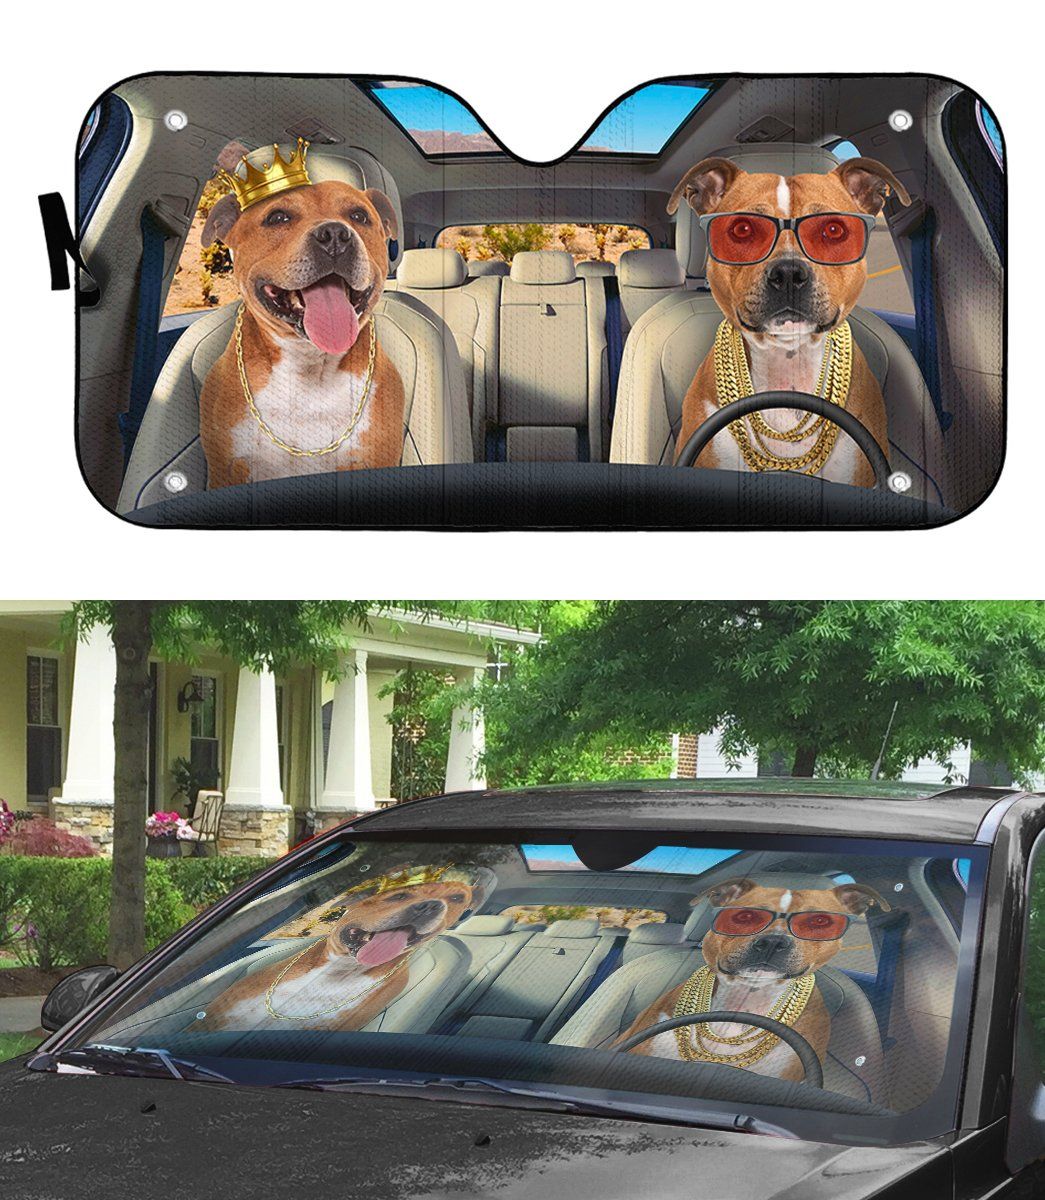 Gearhuman 3D Staffordshire Bull Terrier Dog Auto Car Sunshade GV03034 Auto Sunshade